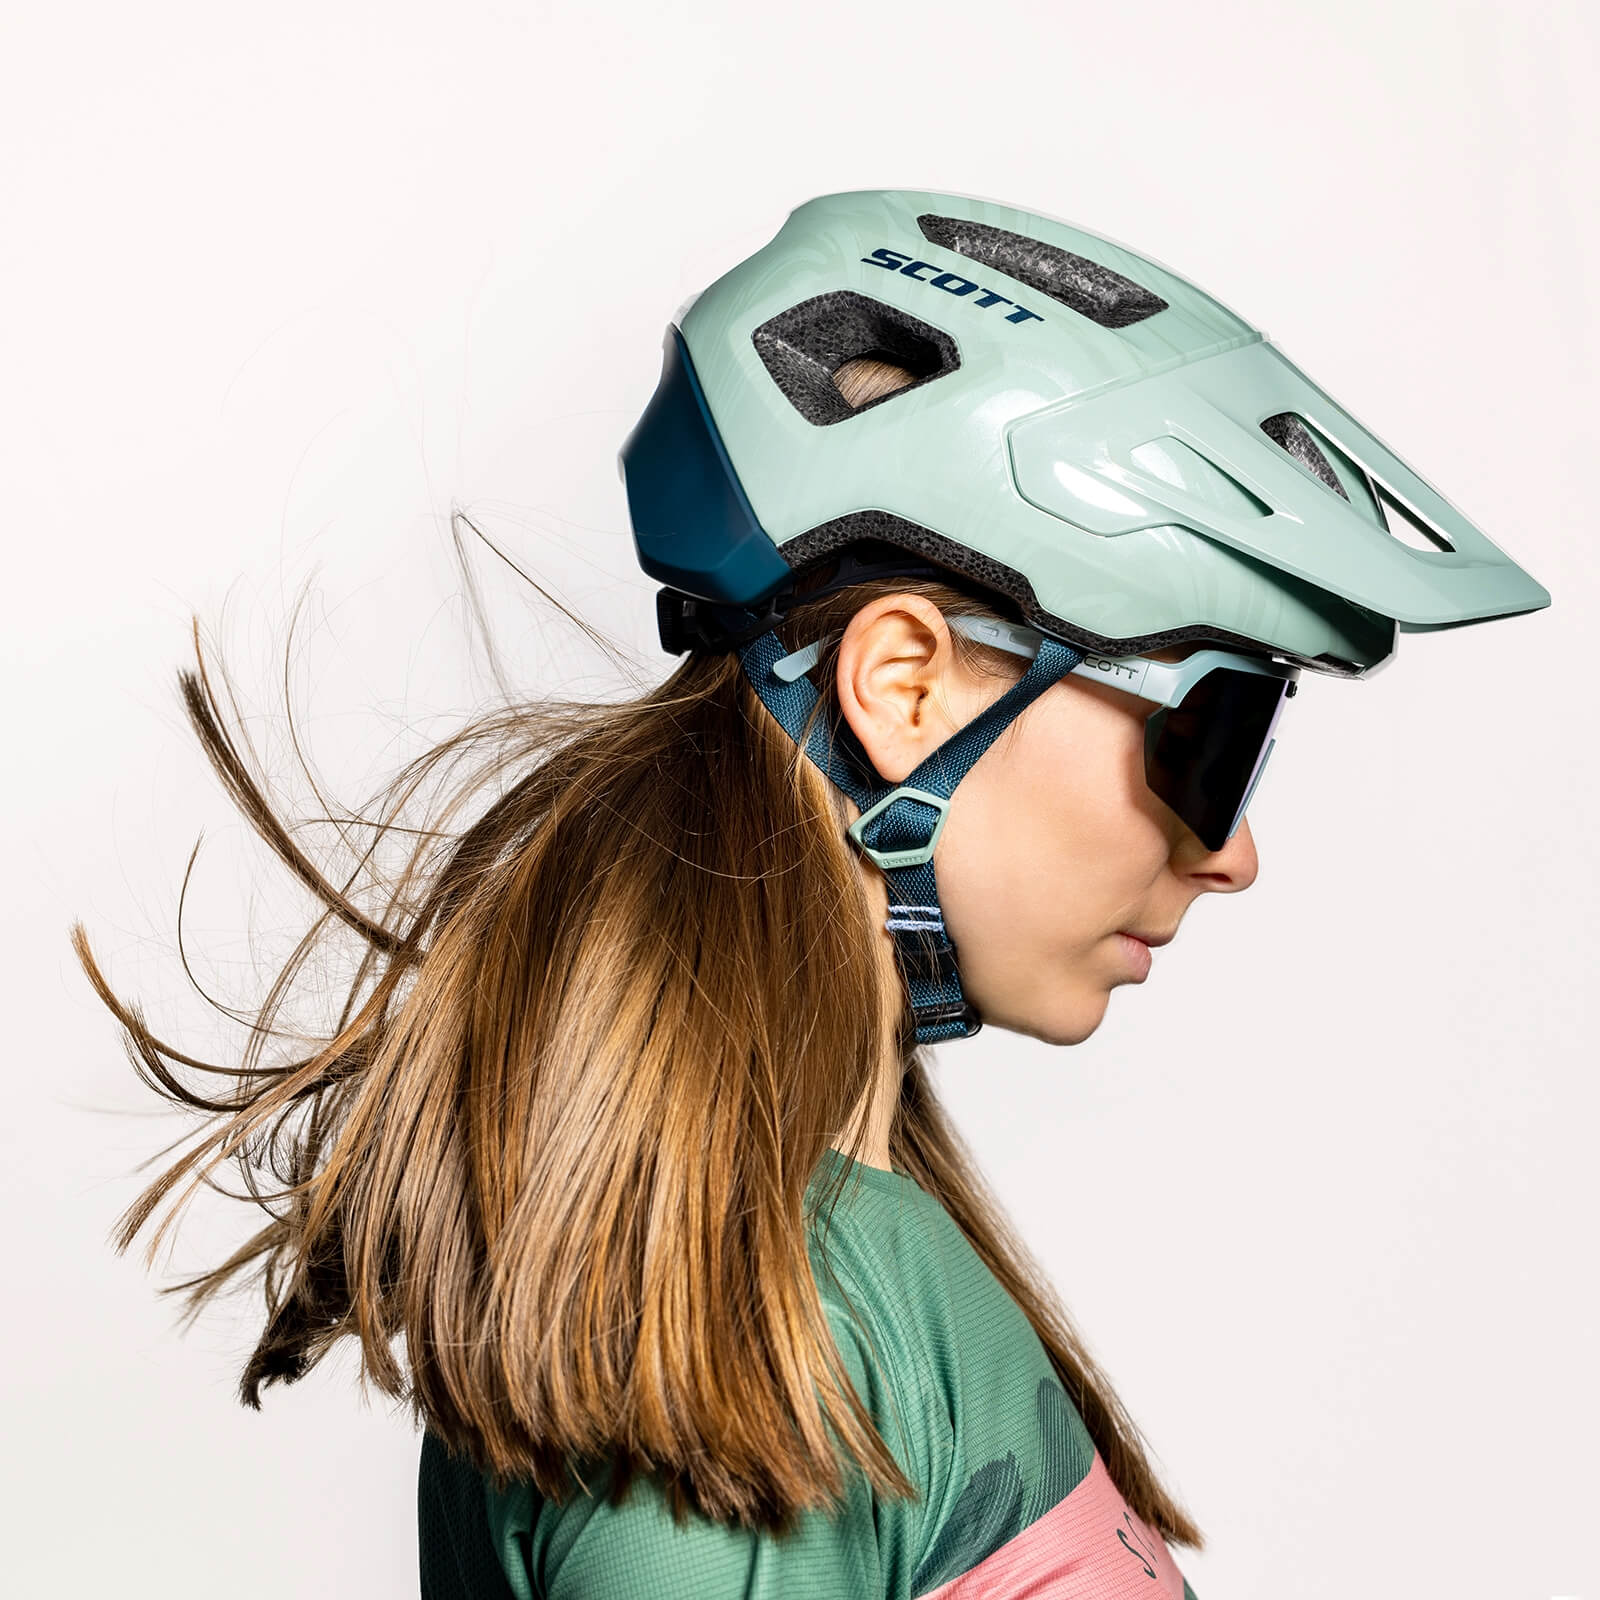 Uso real do capacete de bicicleta scott